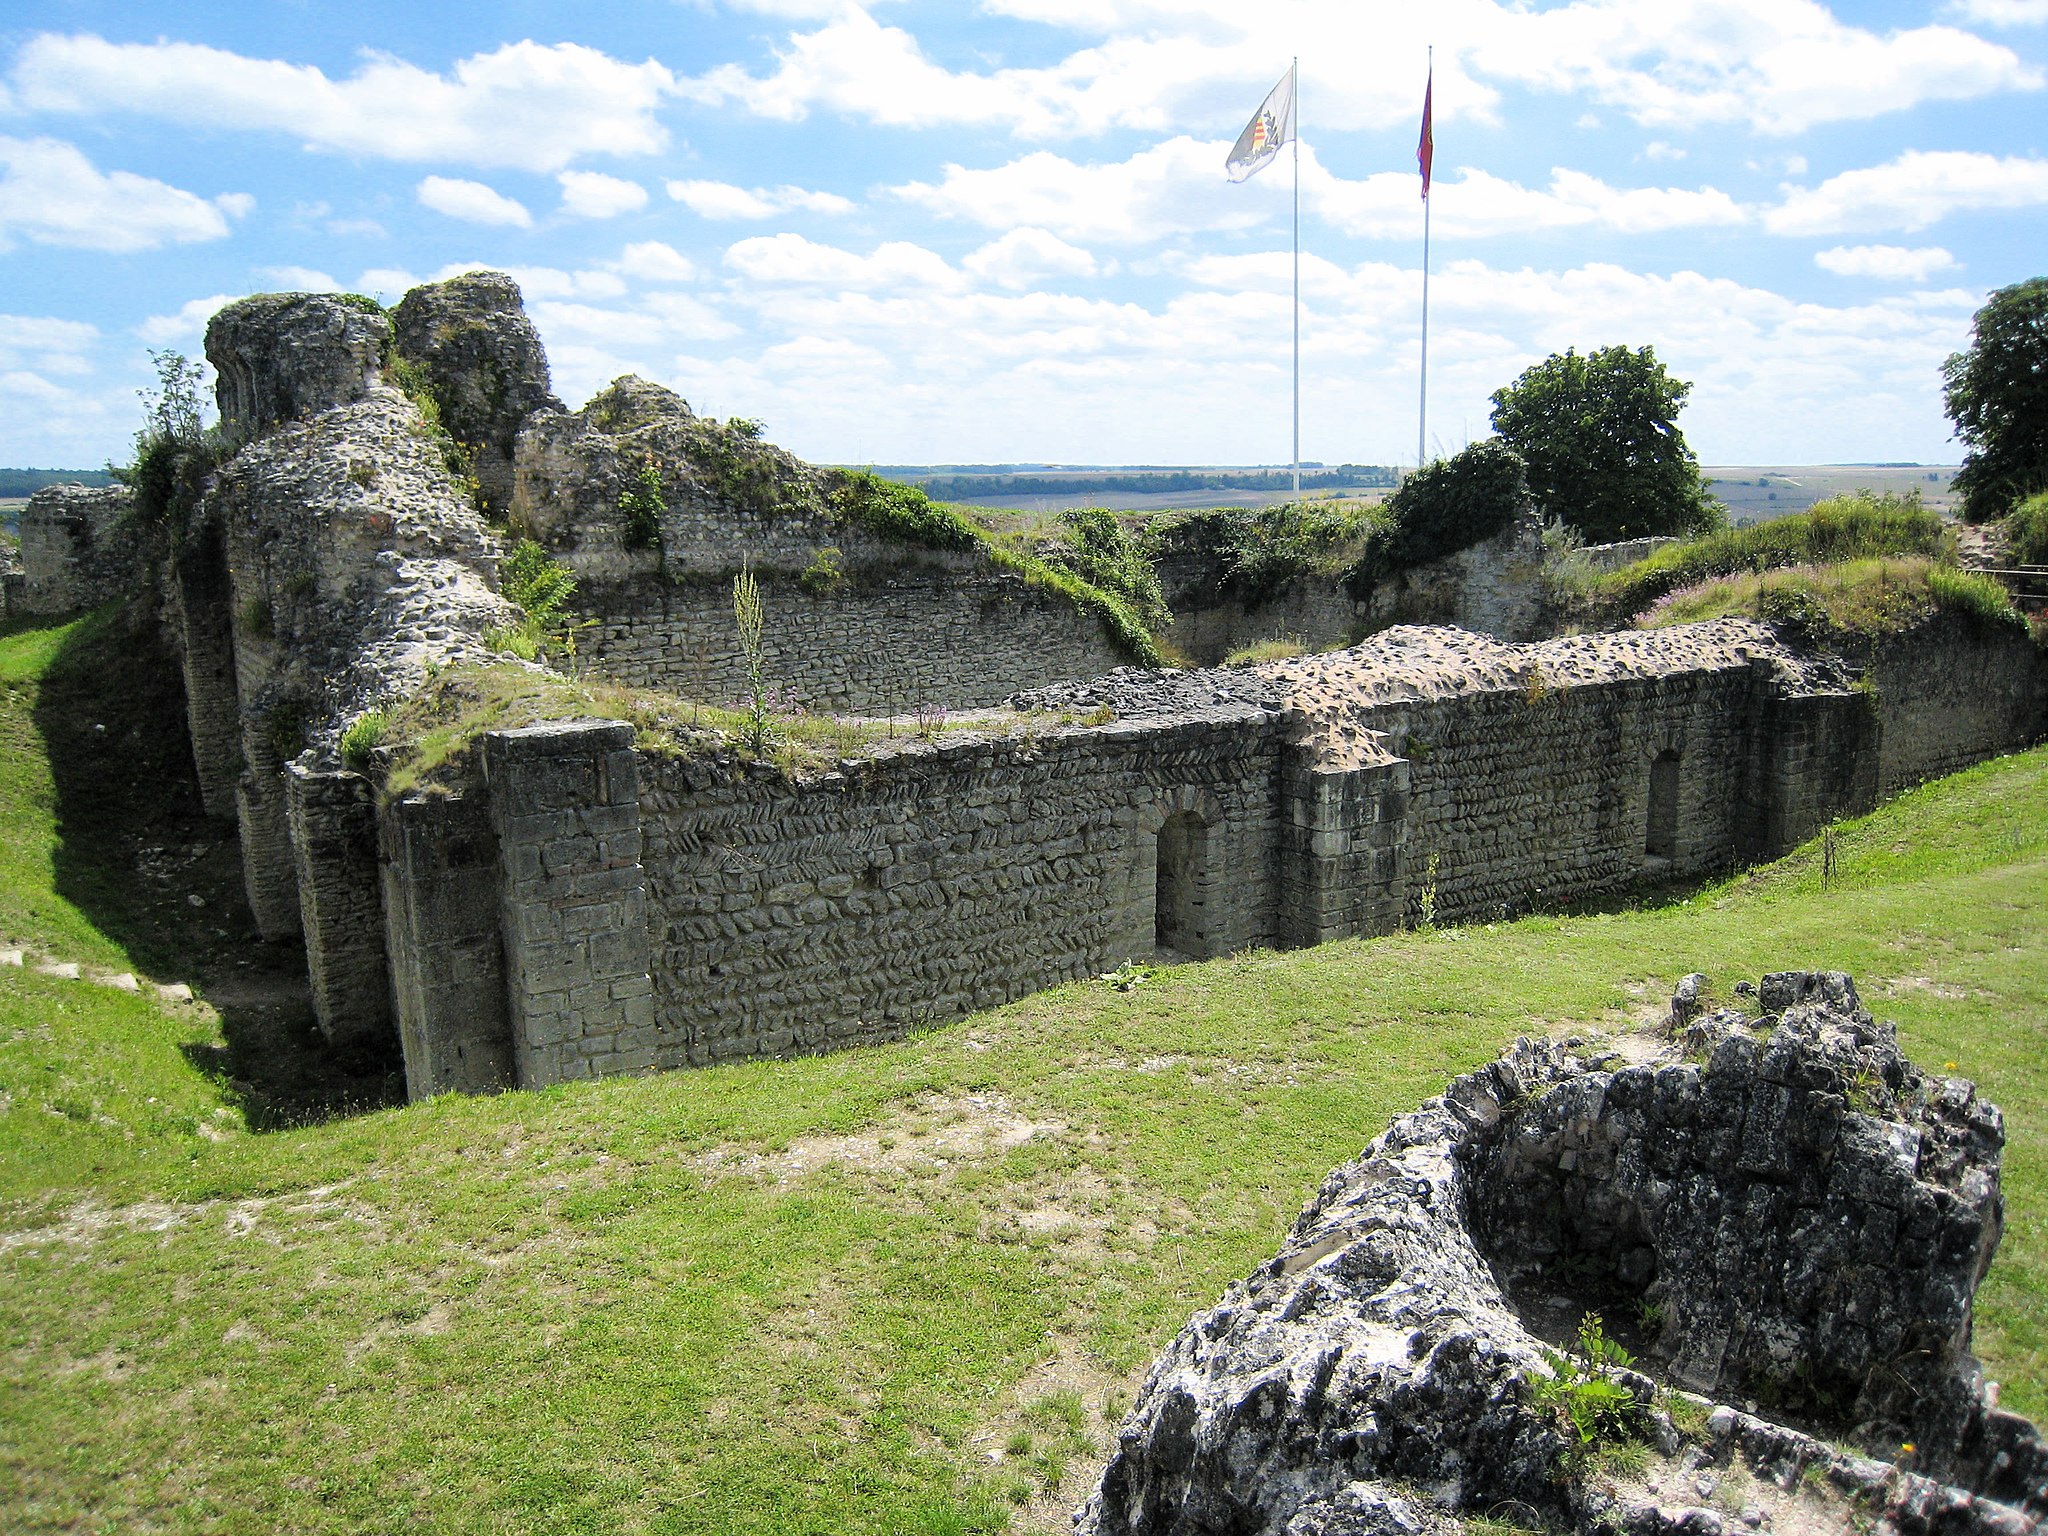 The ruins of the Chteau d'Ivry-la-Bataille.